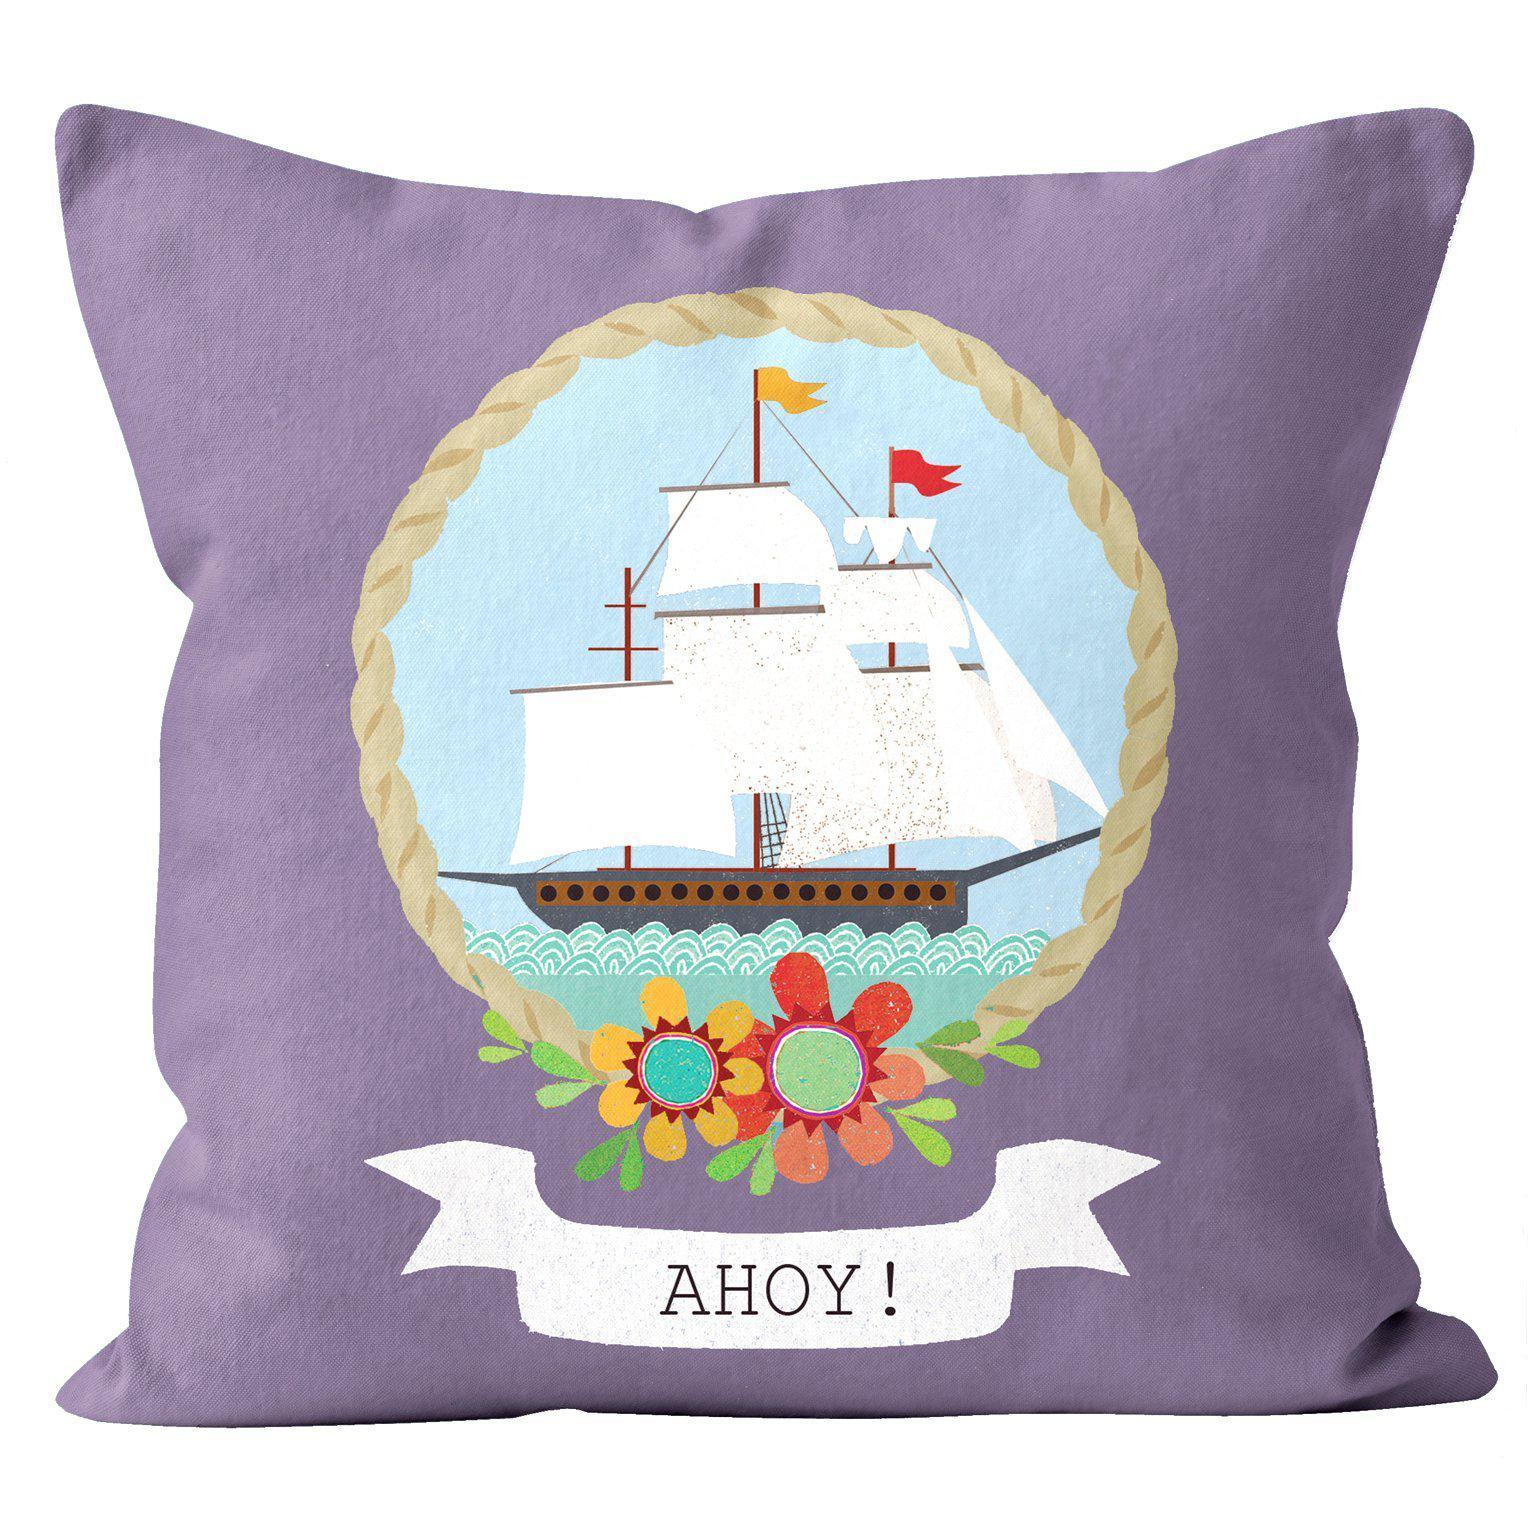 Ahoy - Kali Stileman Cushion - Handmade Cushions UK - WeLoveCushions